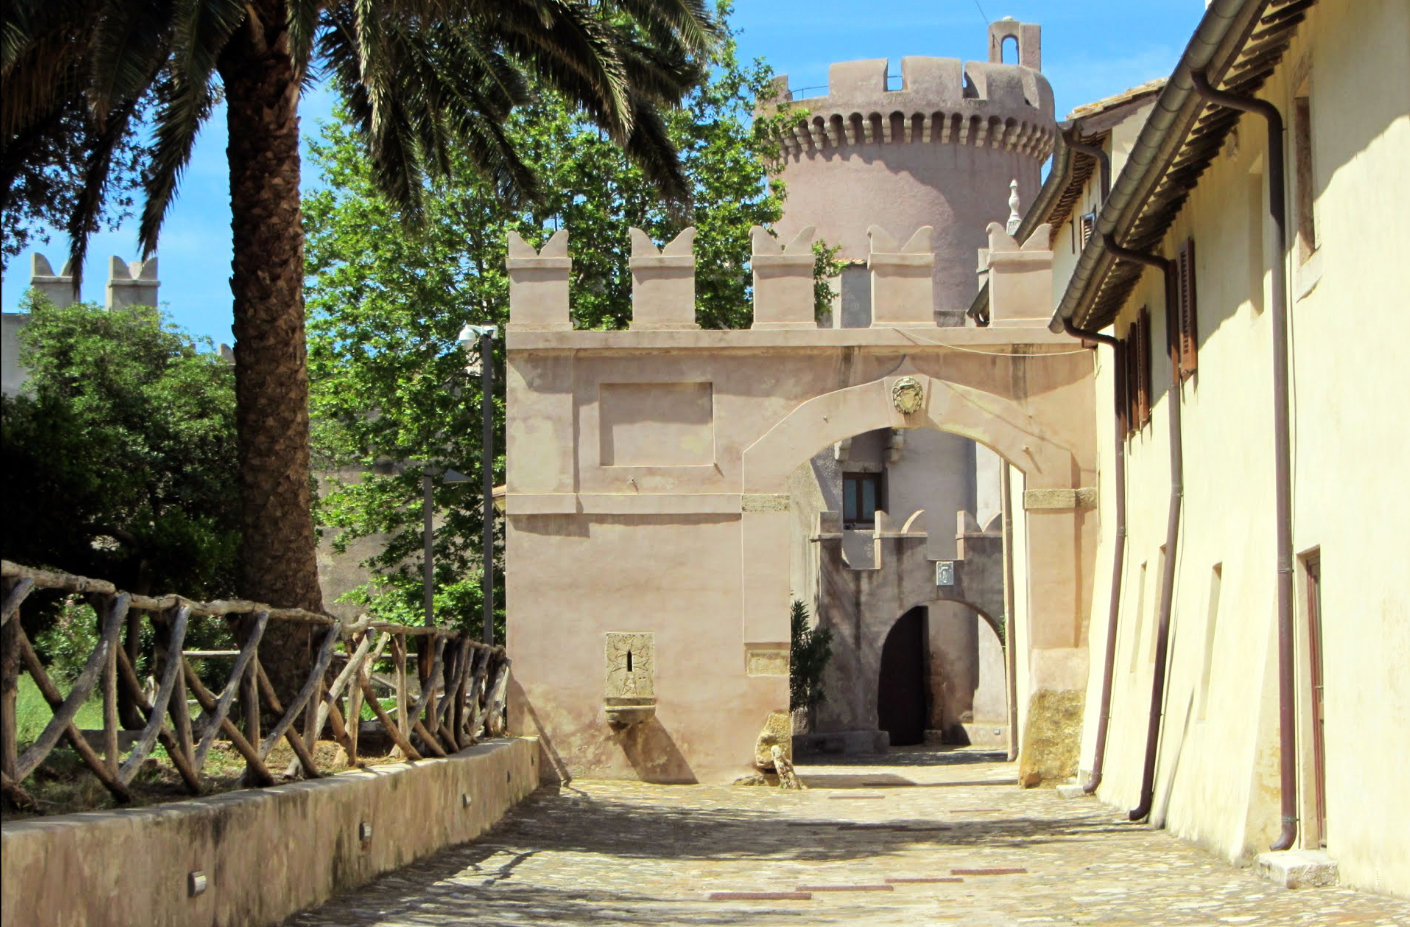 El Castillo de Santa Severa